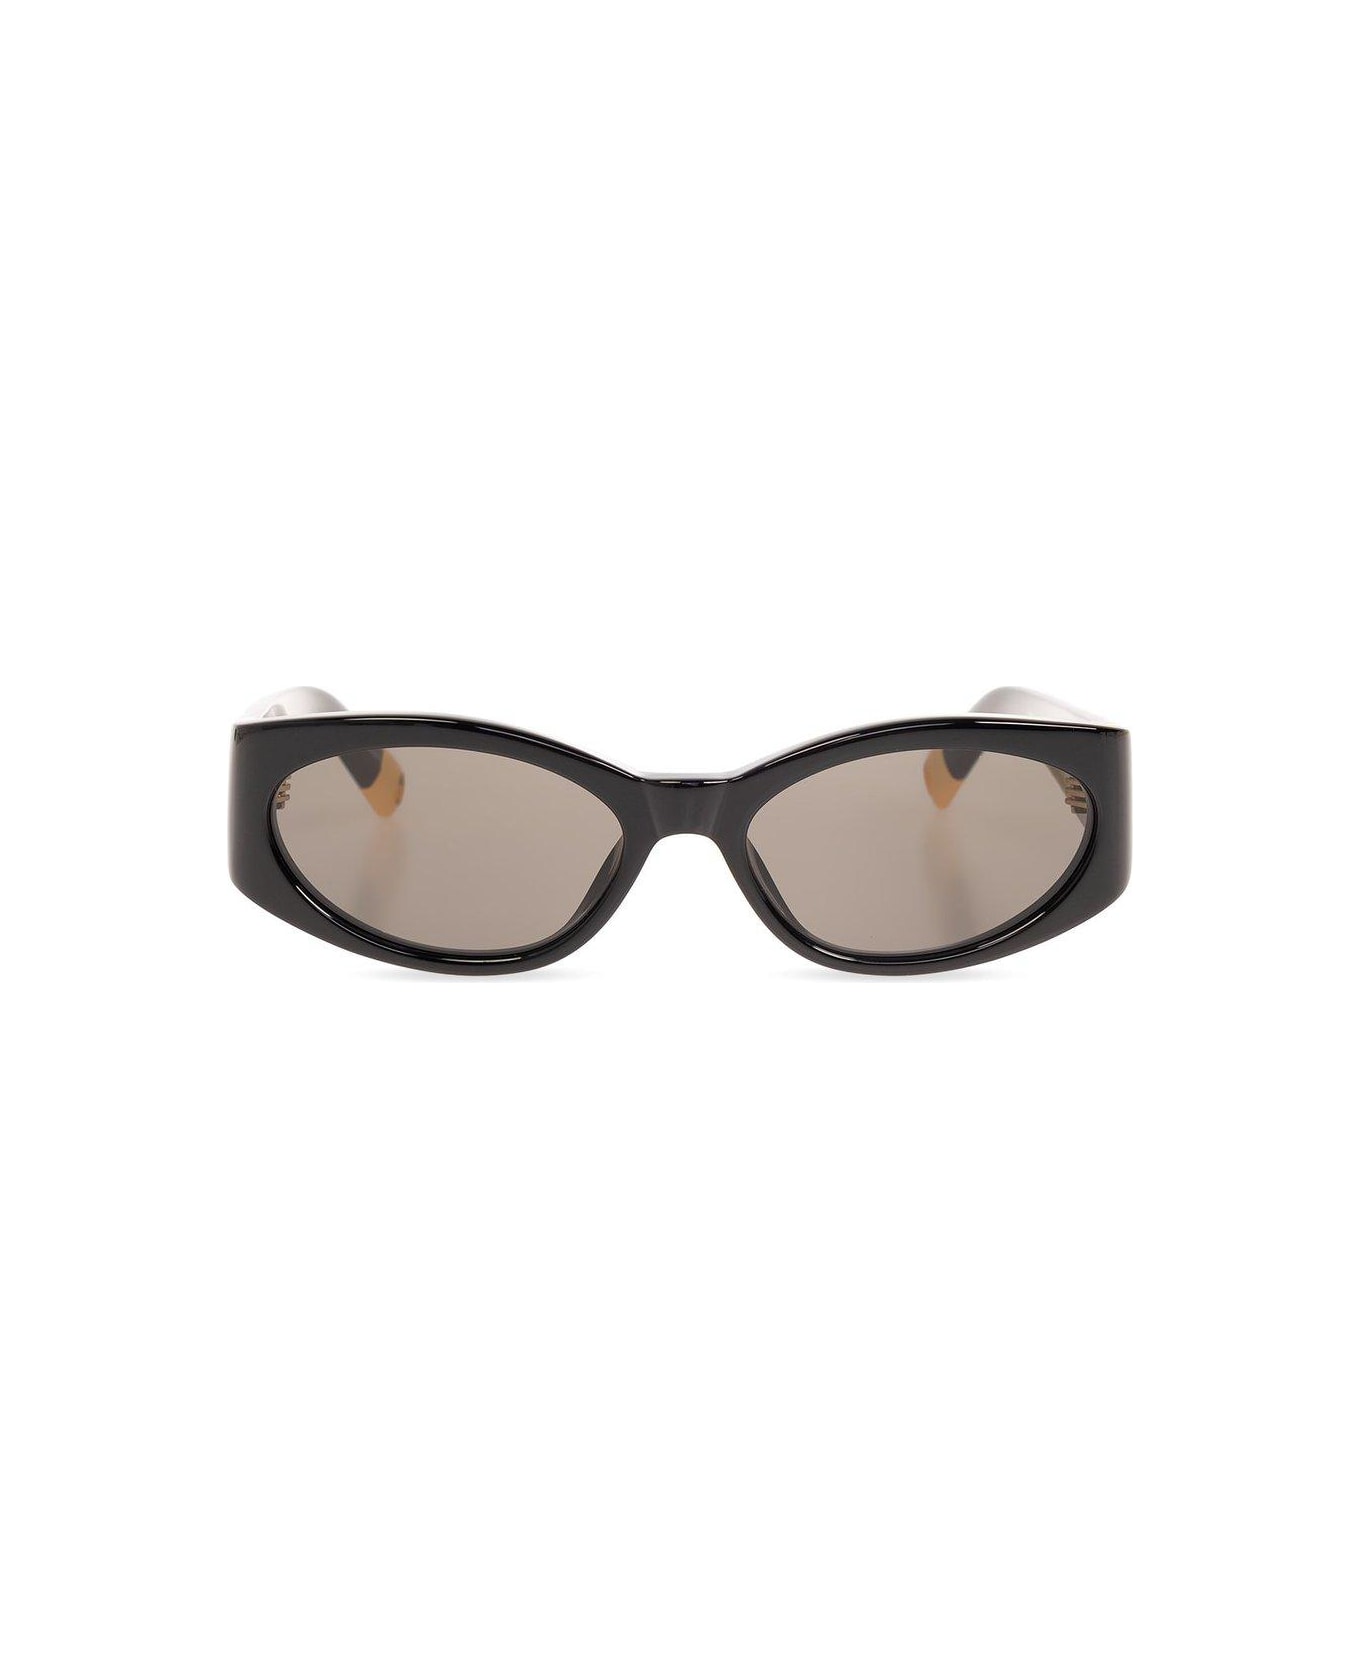 Jacquemus Oval Frame Sunglasses - Black サングラス